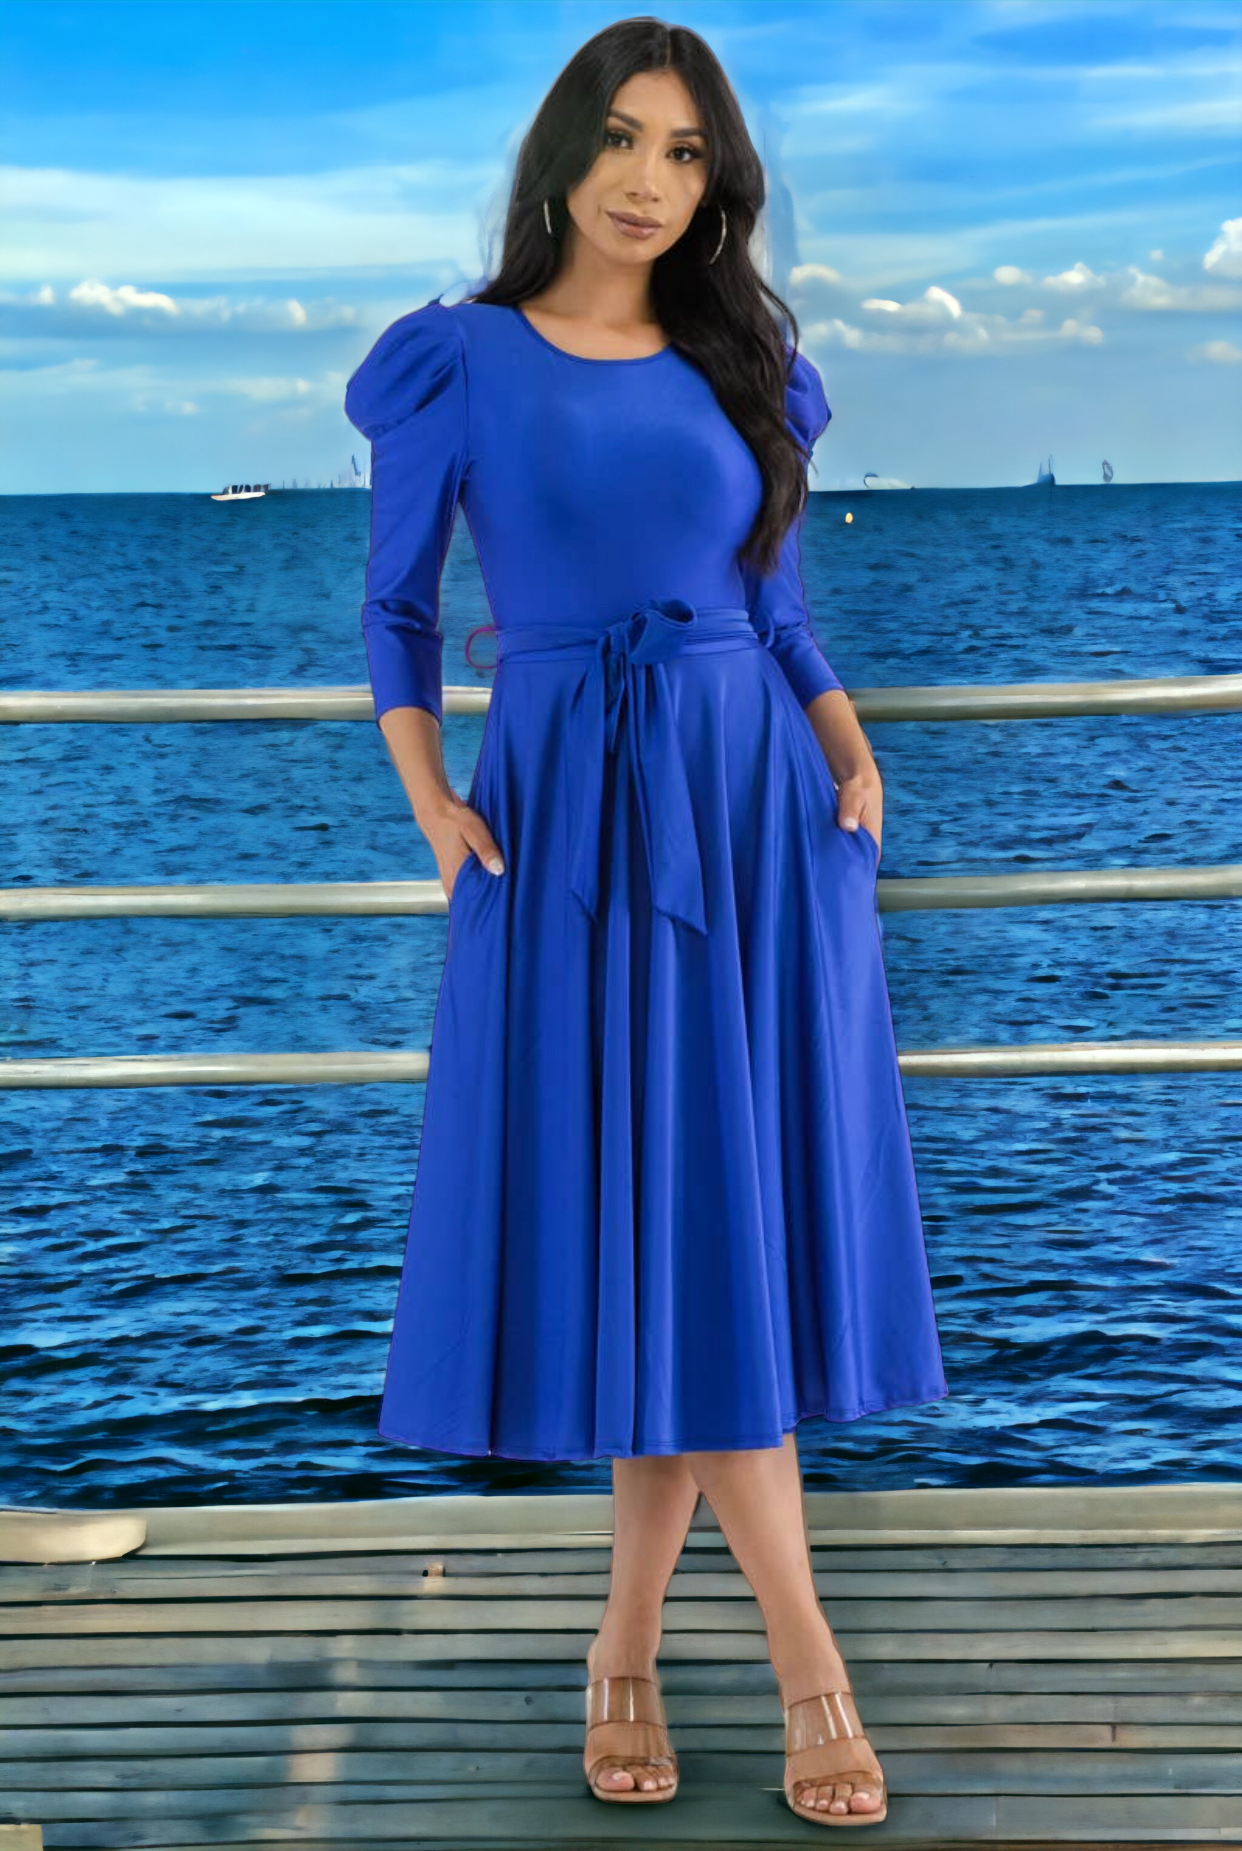 Puff Sleeve Cocktail Dress, Sizes 1X - 3X (Royal Blue)